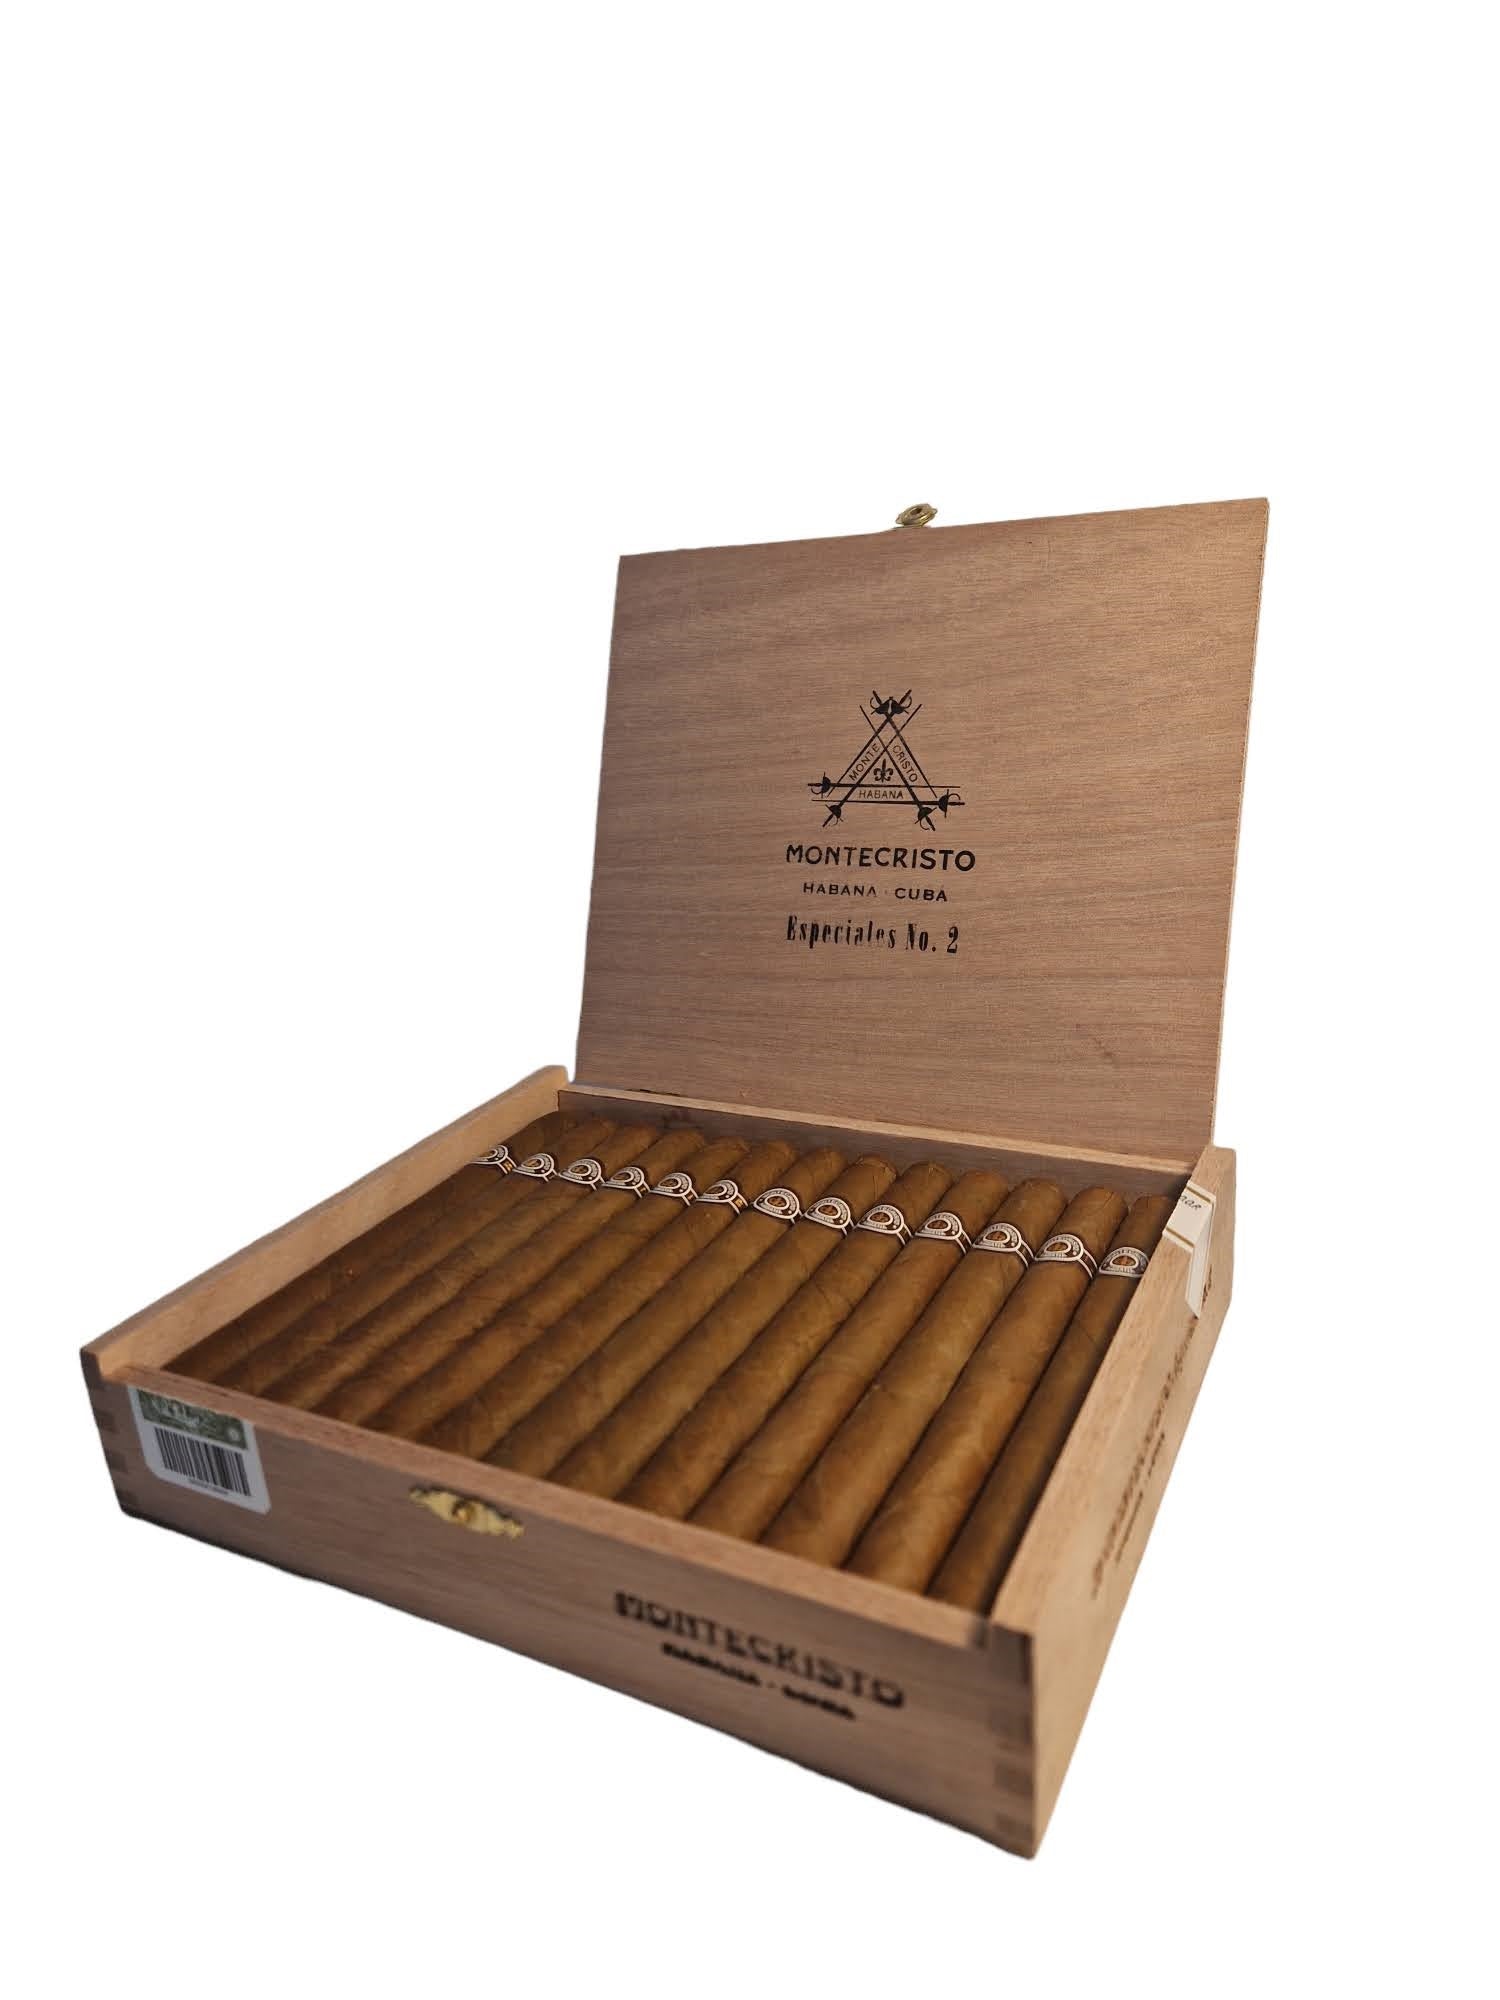 EMPTY WOODEN CIGAR BOX MEDIUM SIZE - Online Cigar Shop